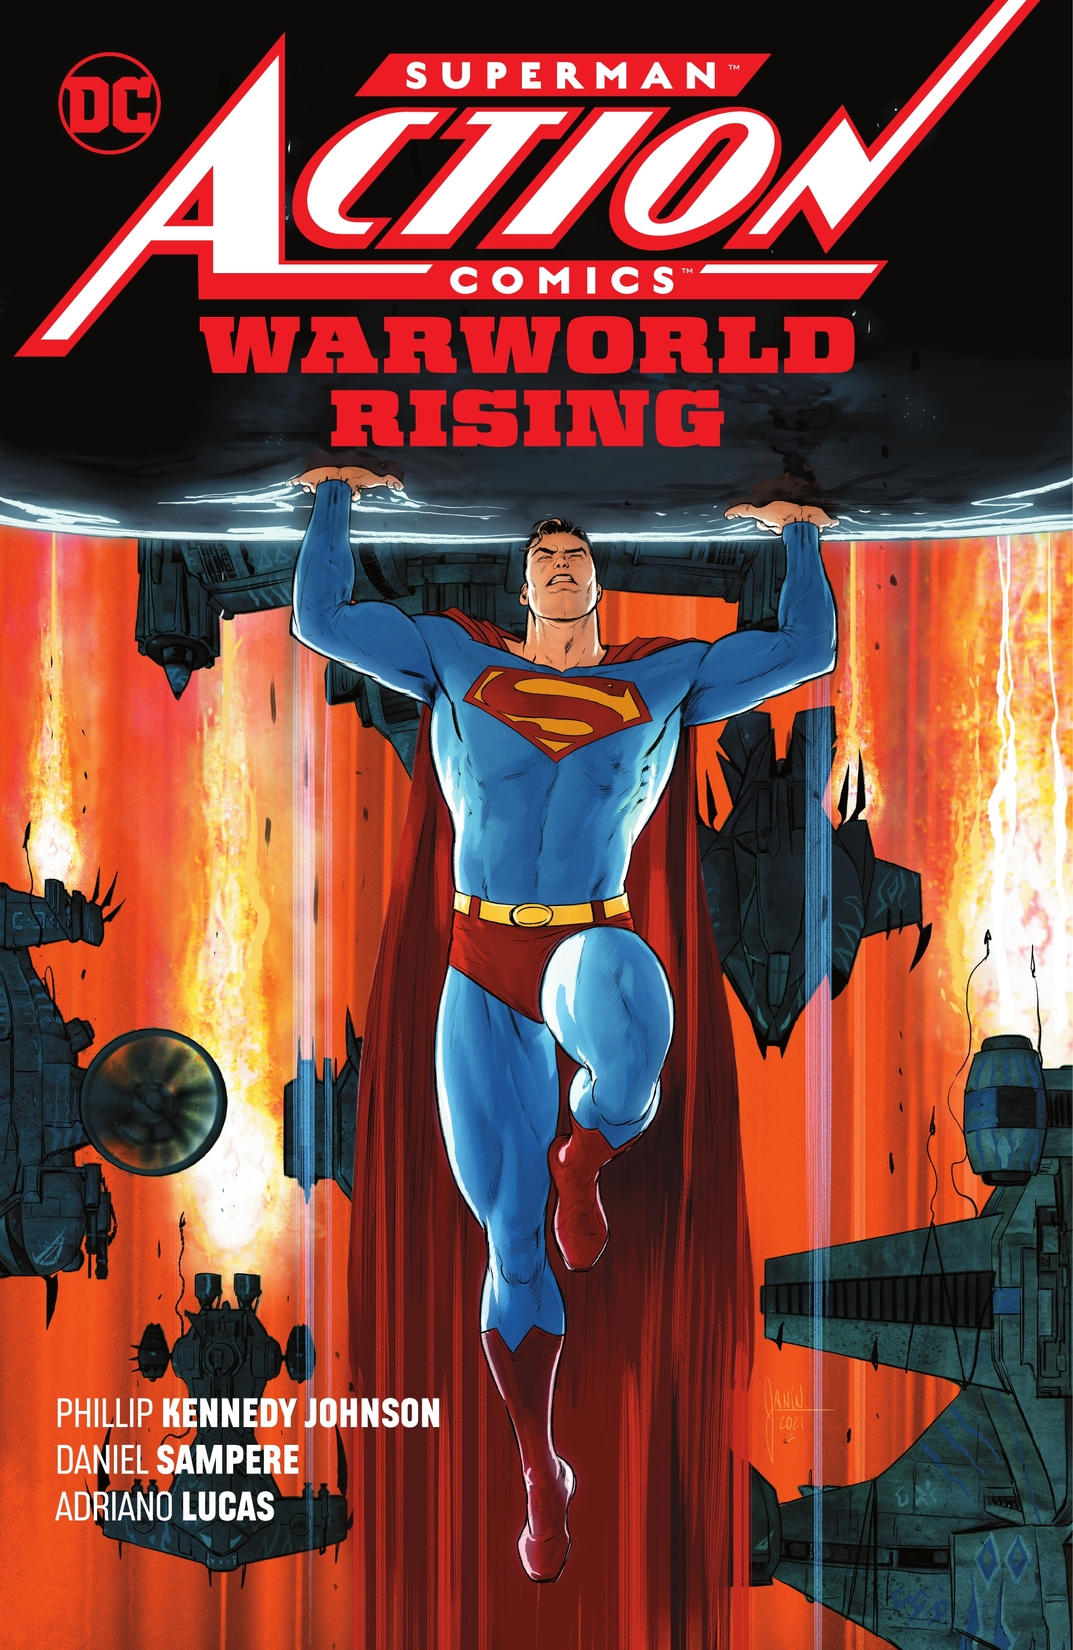 Superman: Action Comics Vol. 1: Warworld Rising preview images